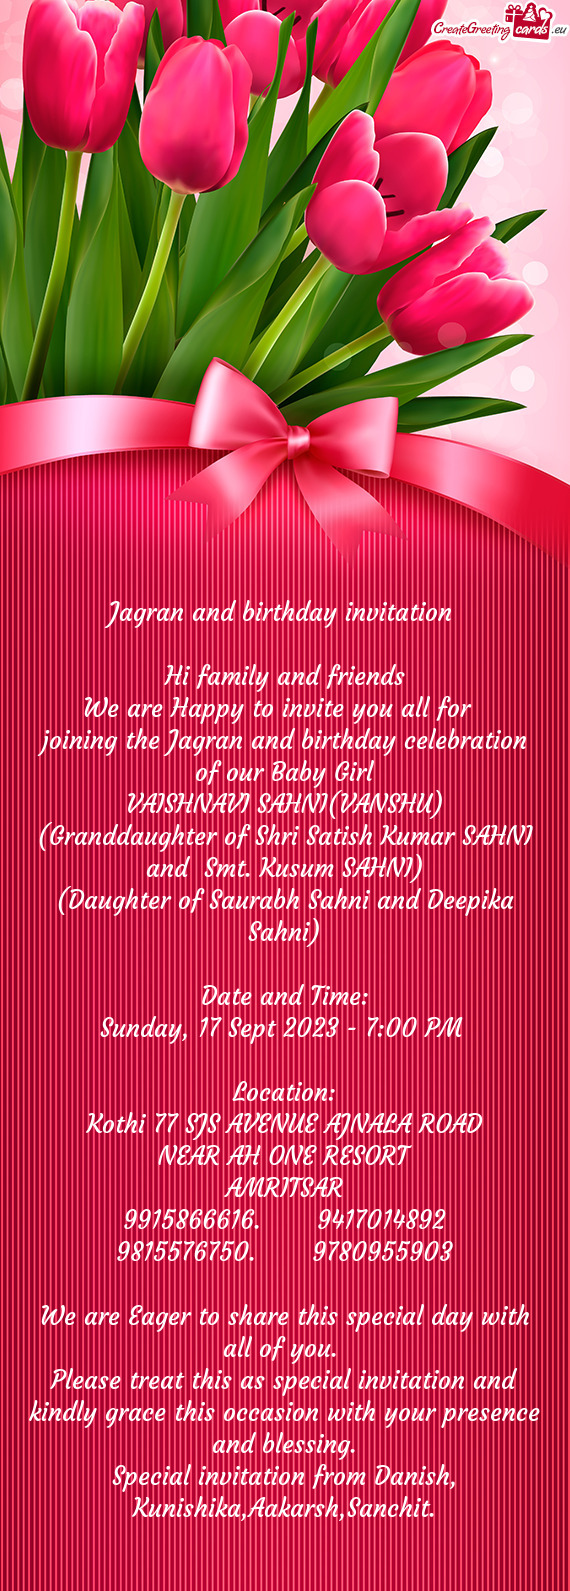 Special invitation from Danish, Kunishika,Aakarsh,Sanchit